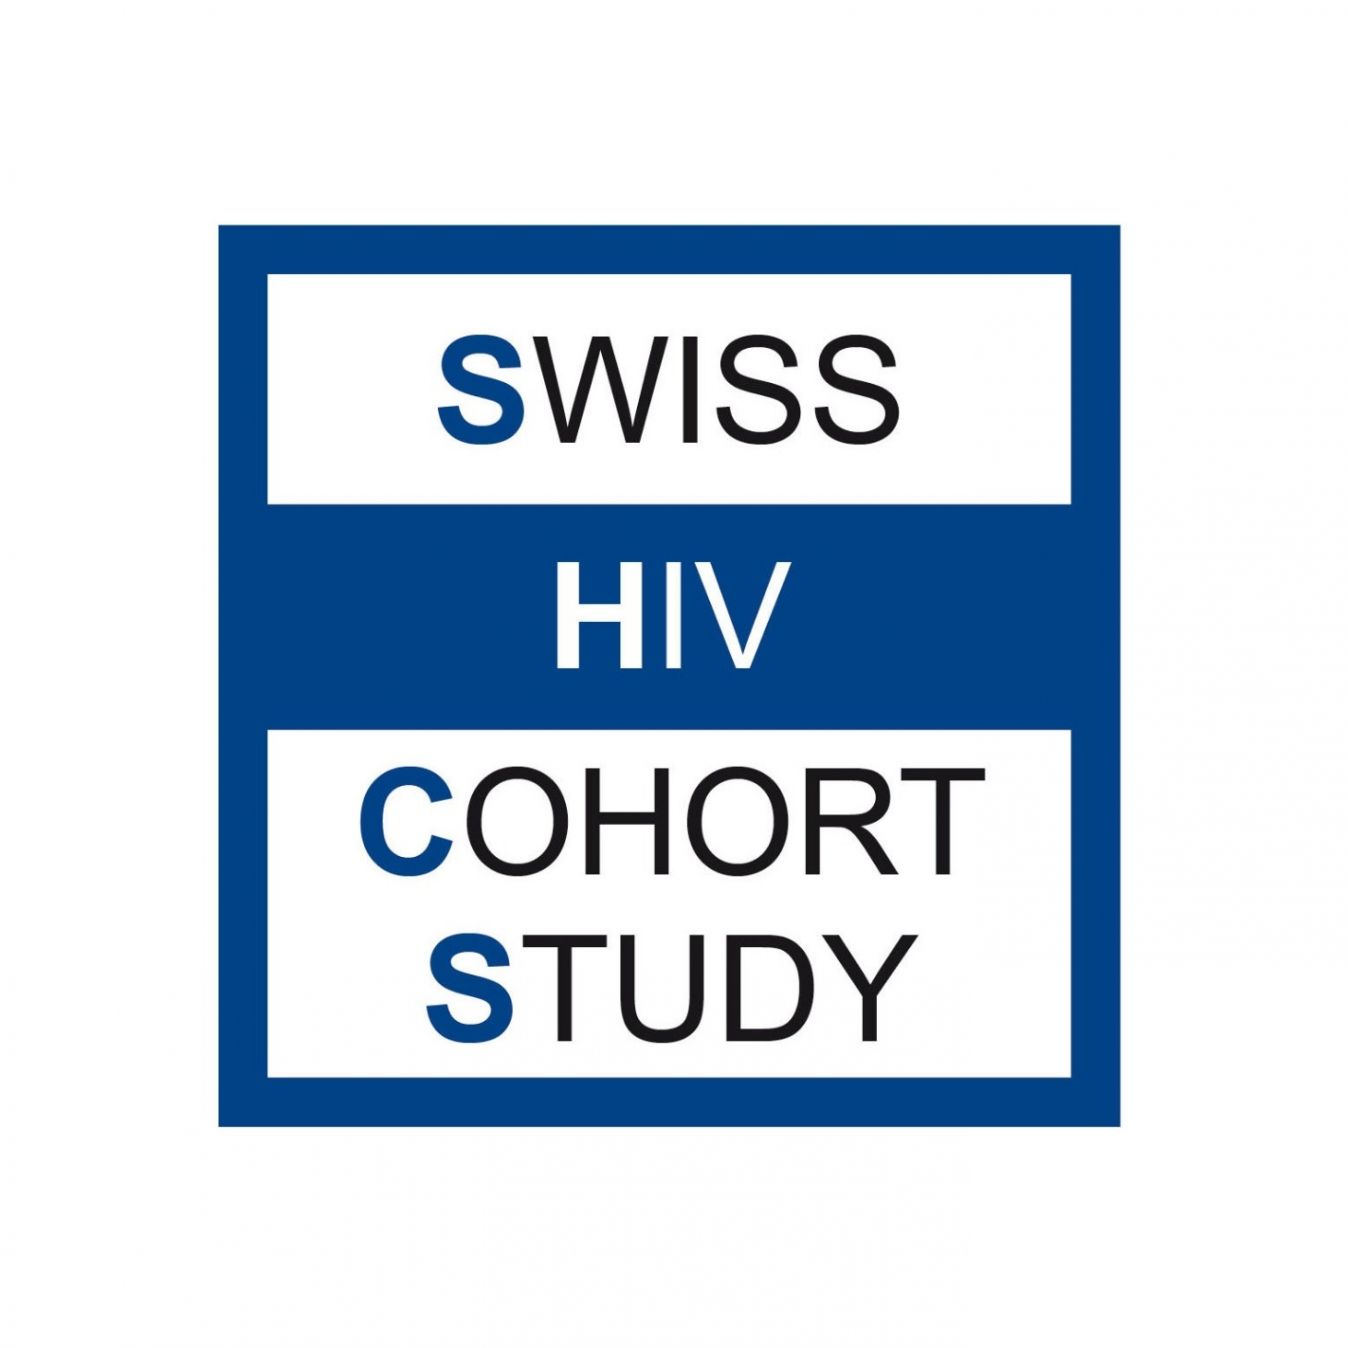 Swiss HIV Cohort Study